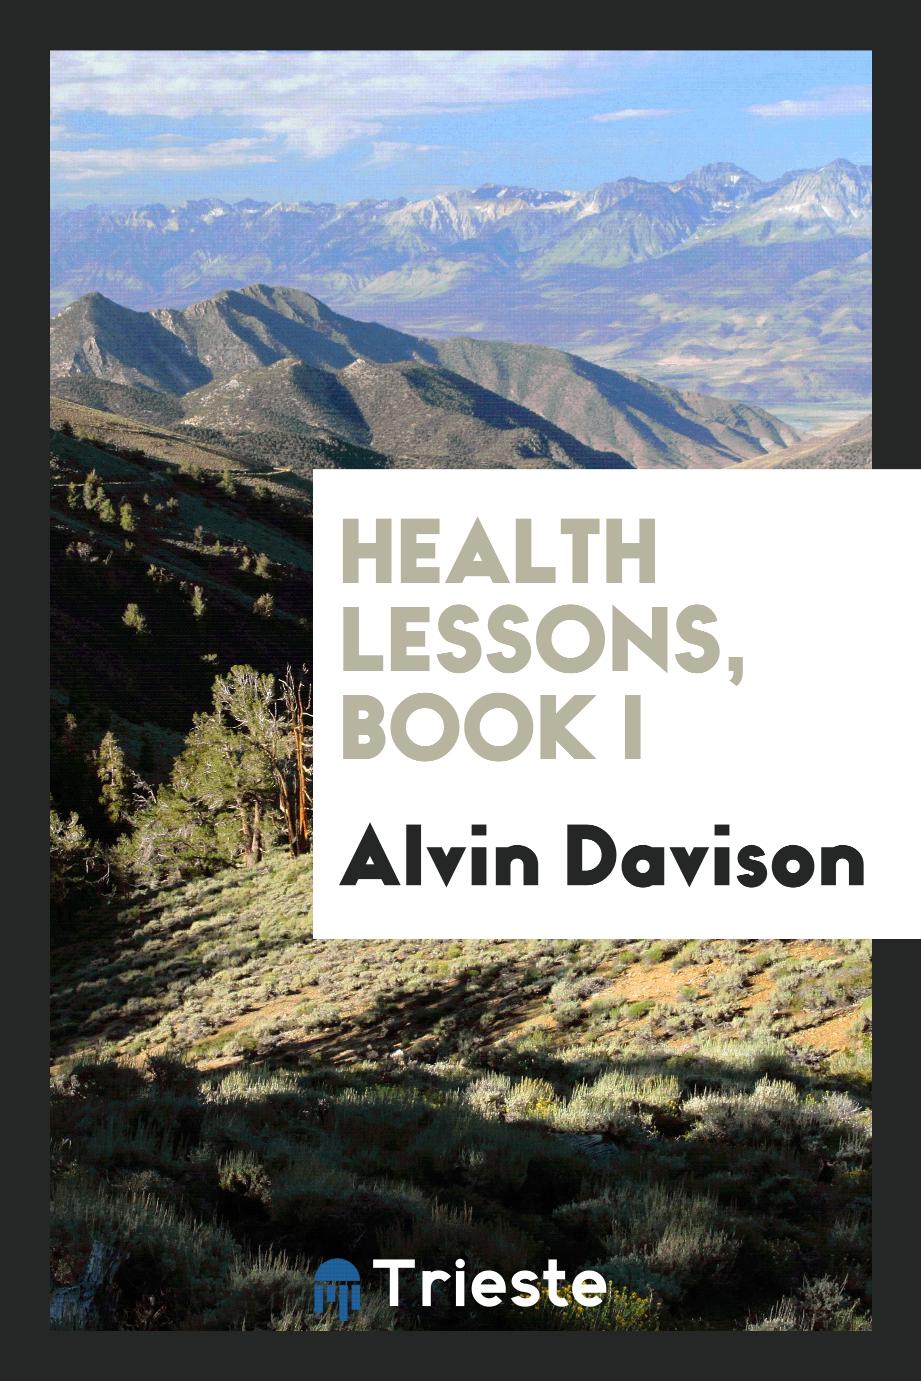 Health lessons, book I